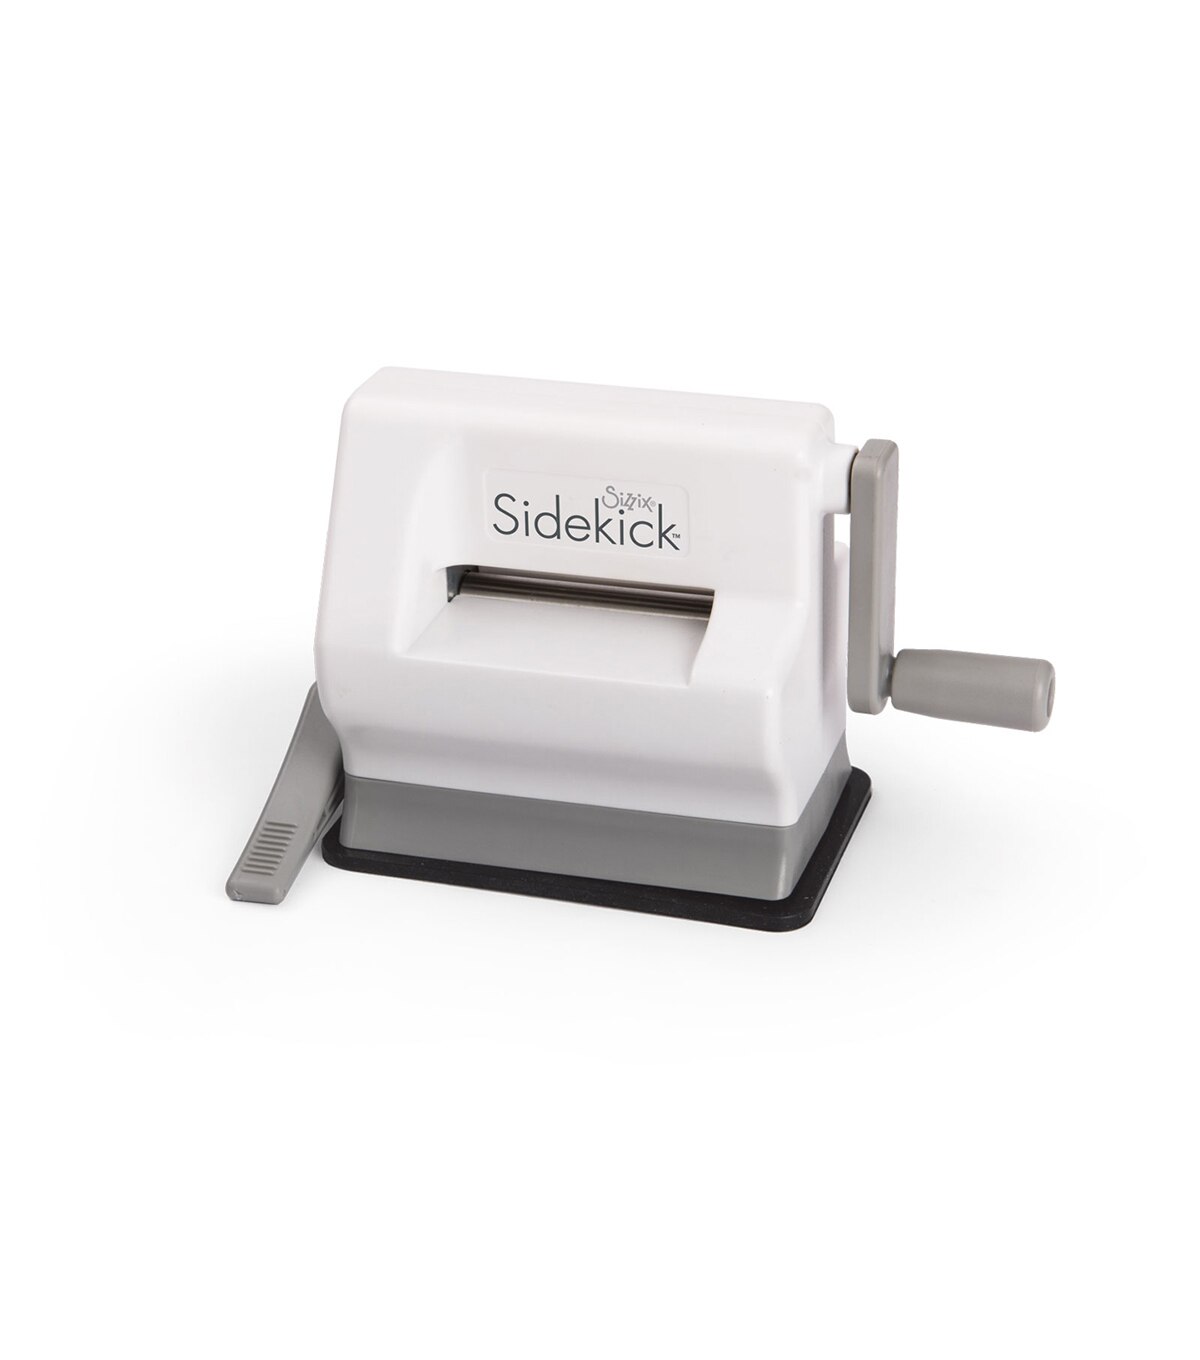 Sizzix Sidekick Starter Kit (White & Gray) | JOANN